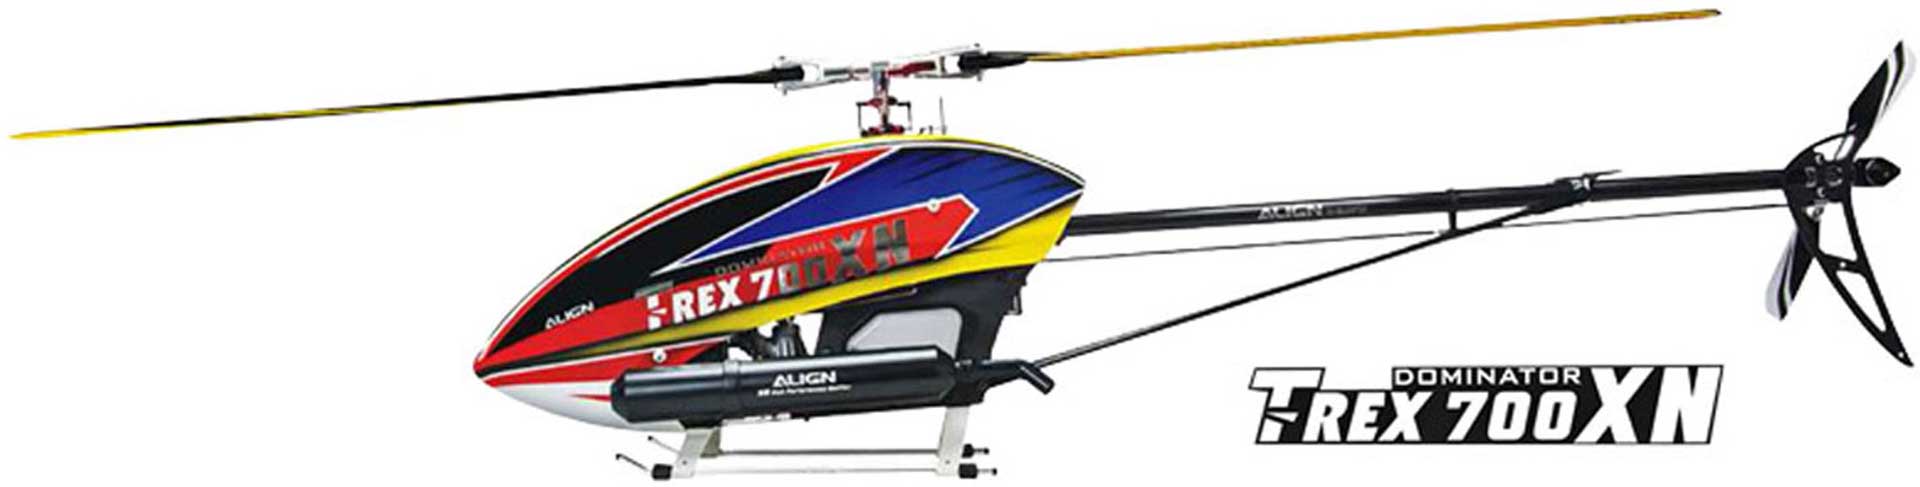 ALIGN T-REX 700XN DOMINATOR KIT Hubschrauber / Helikopter